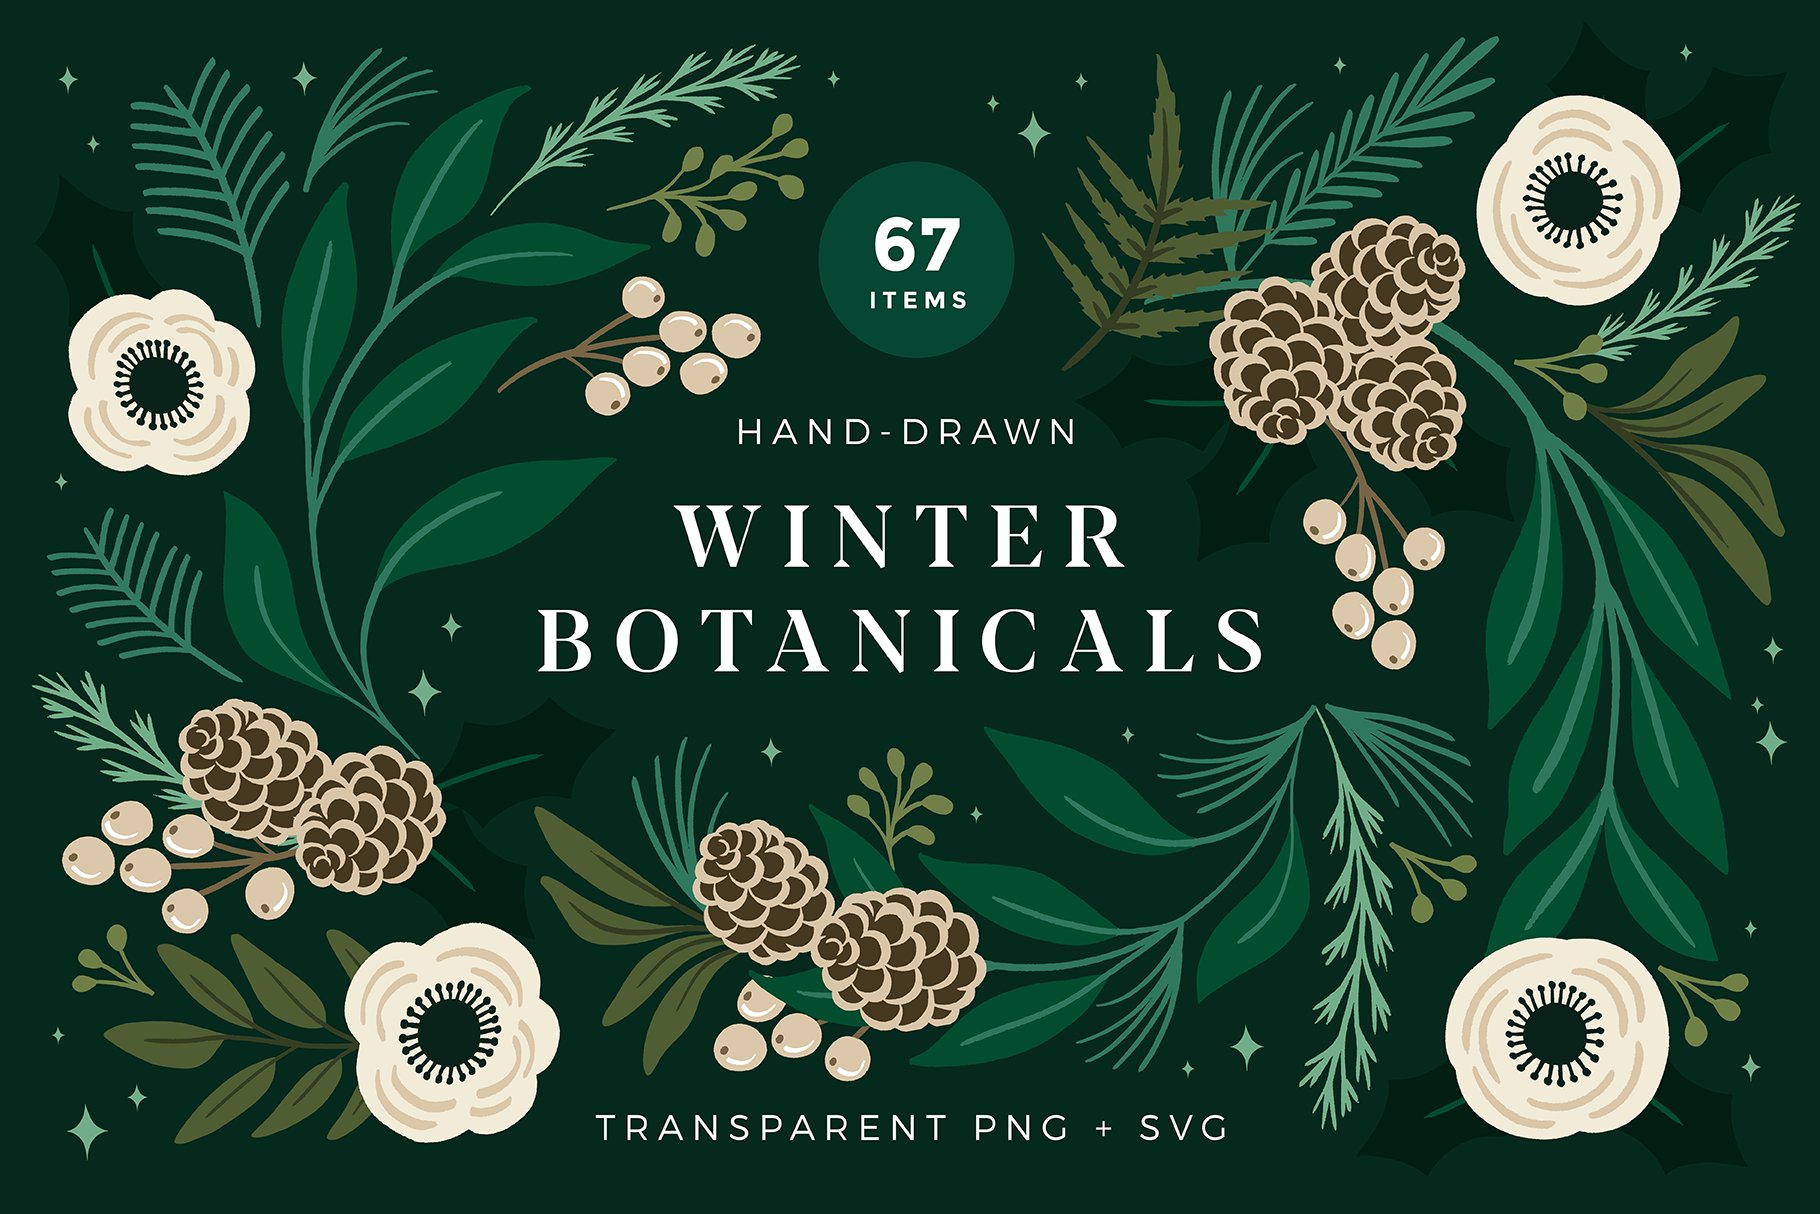 Christmas Botanical Illustrations cover image.